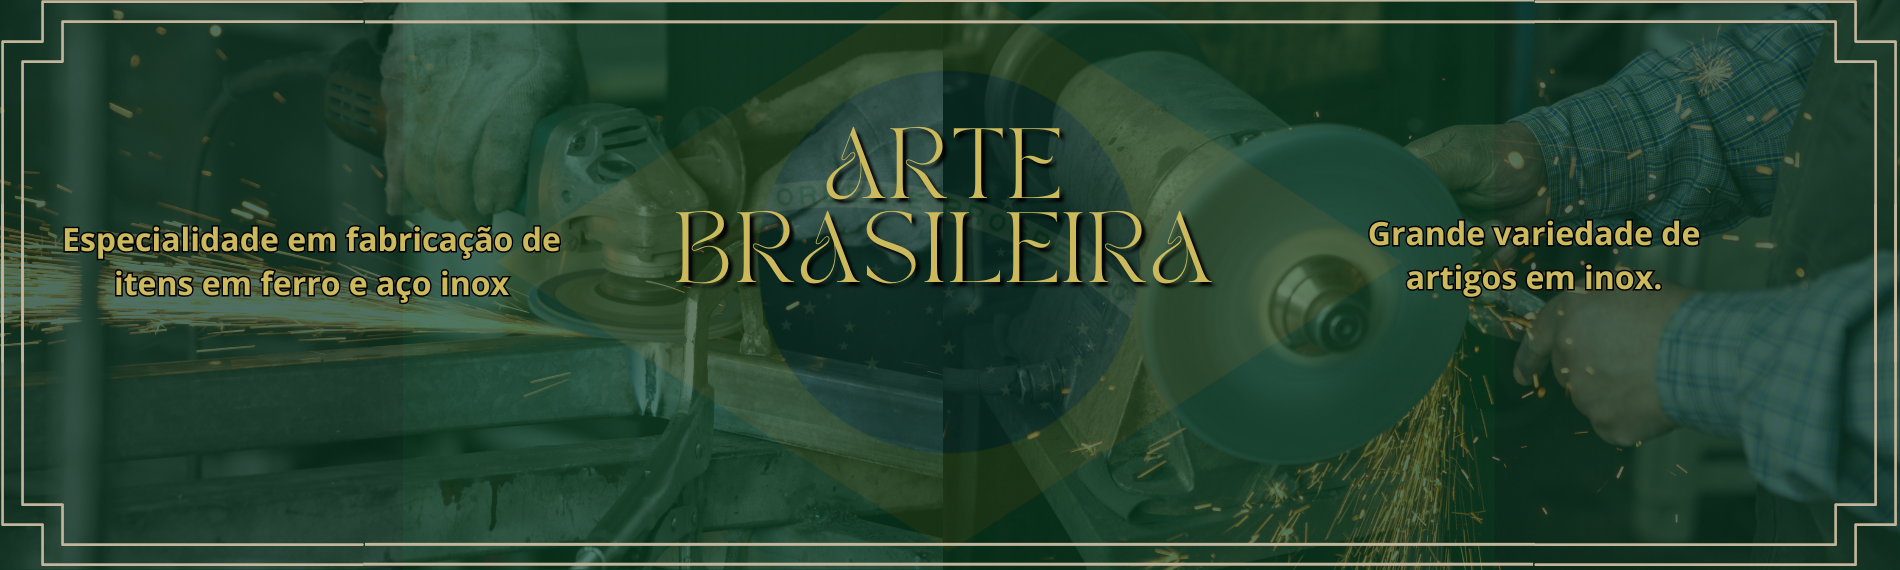 Serralheria Arte Brasileira